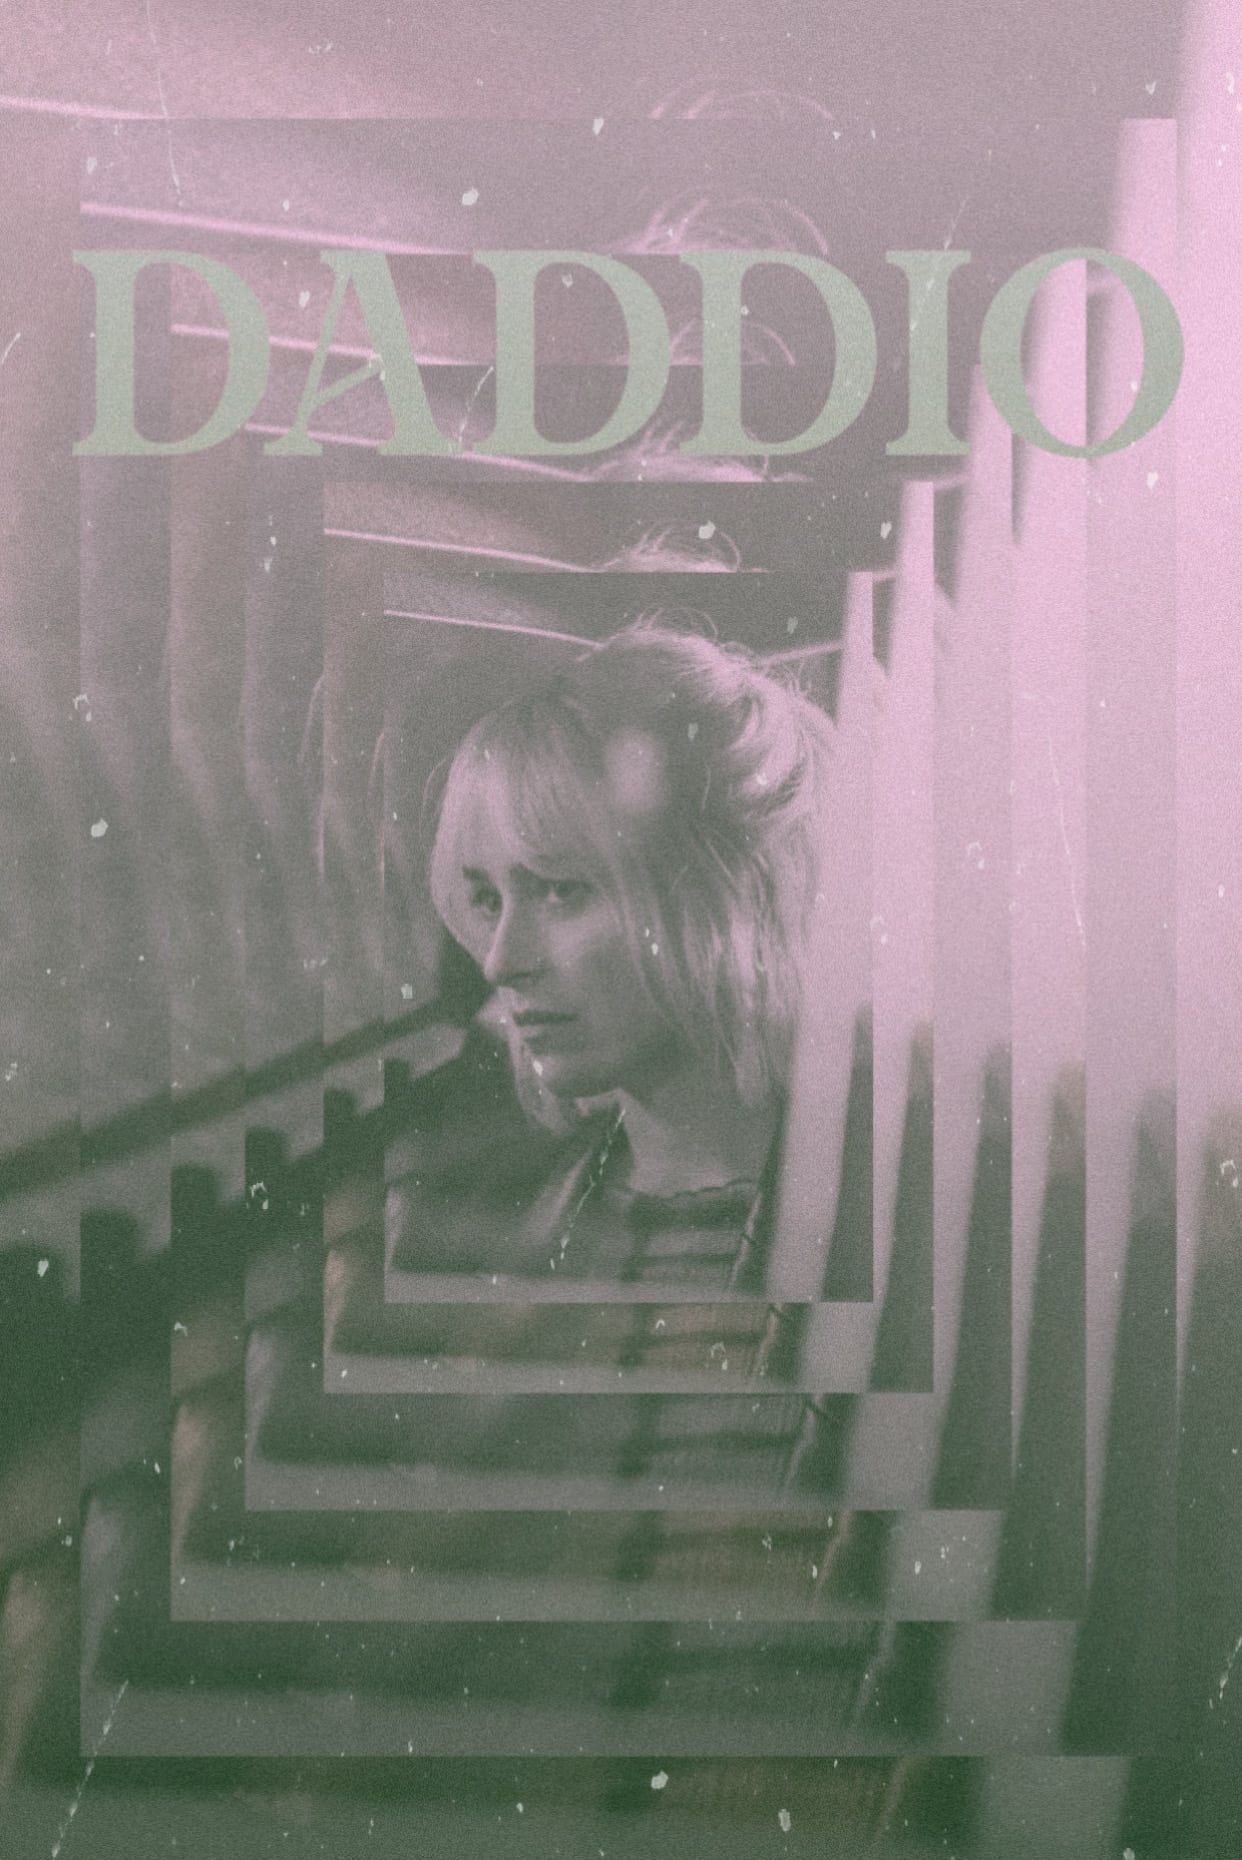 Daddio Movie Poster Showing Dakota Johnson in a Square Optical Illusion